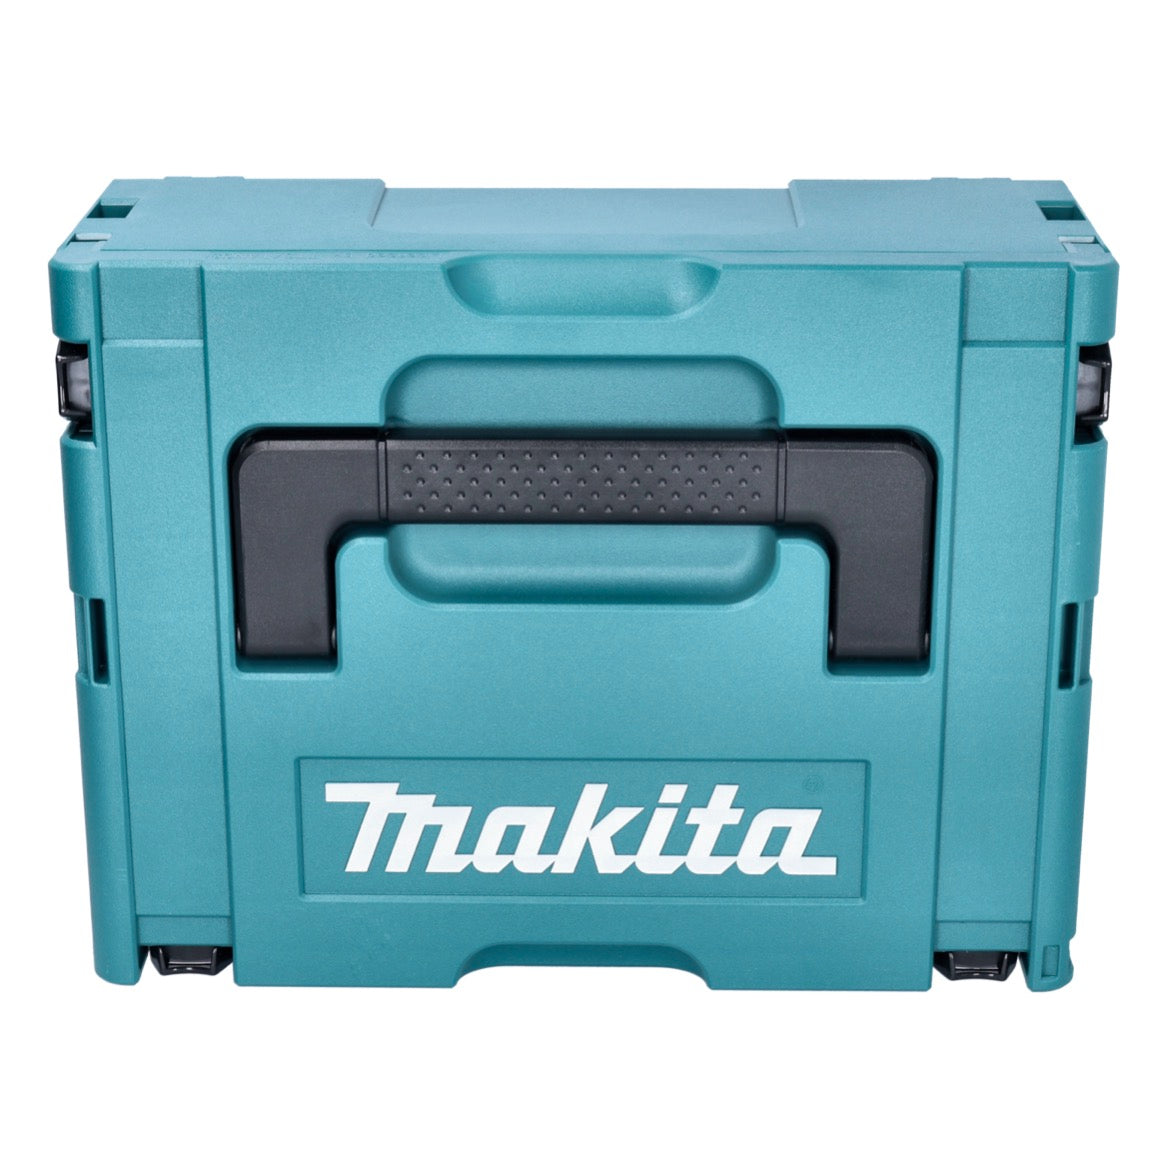 Makita DDF 489 G1J Akku Bohrschrauber 18 V 73 Nm Brushless + 1x Akku 6,0 Ah + Makpac - ohne Ladegerät